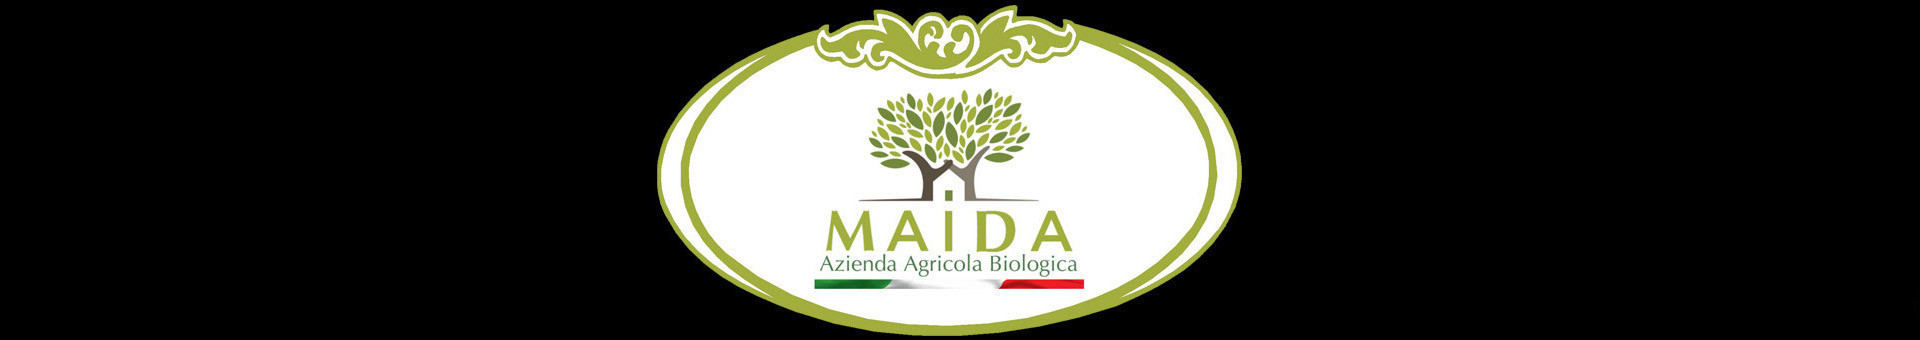 Azienda Agricola Biologica Maida 1